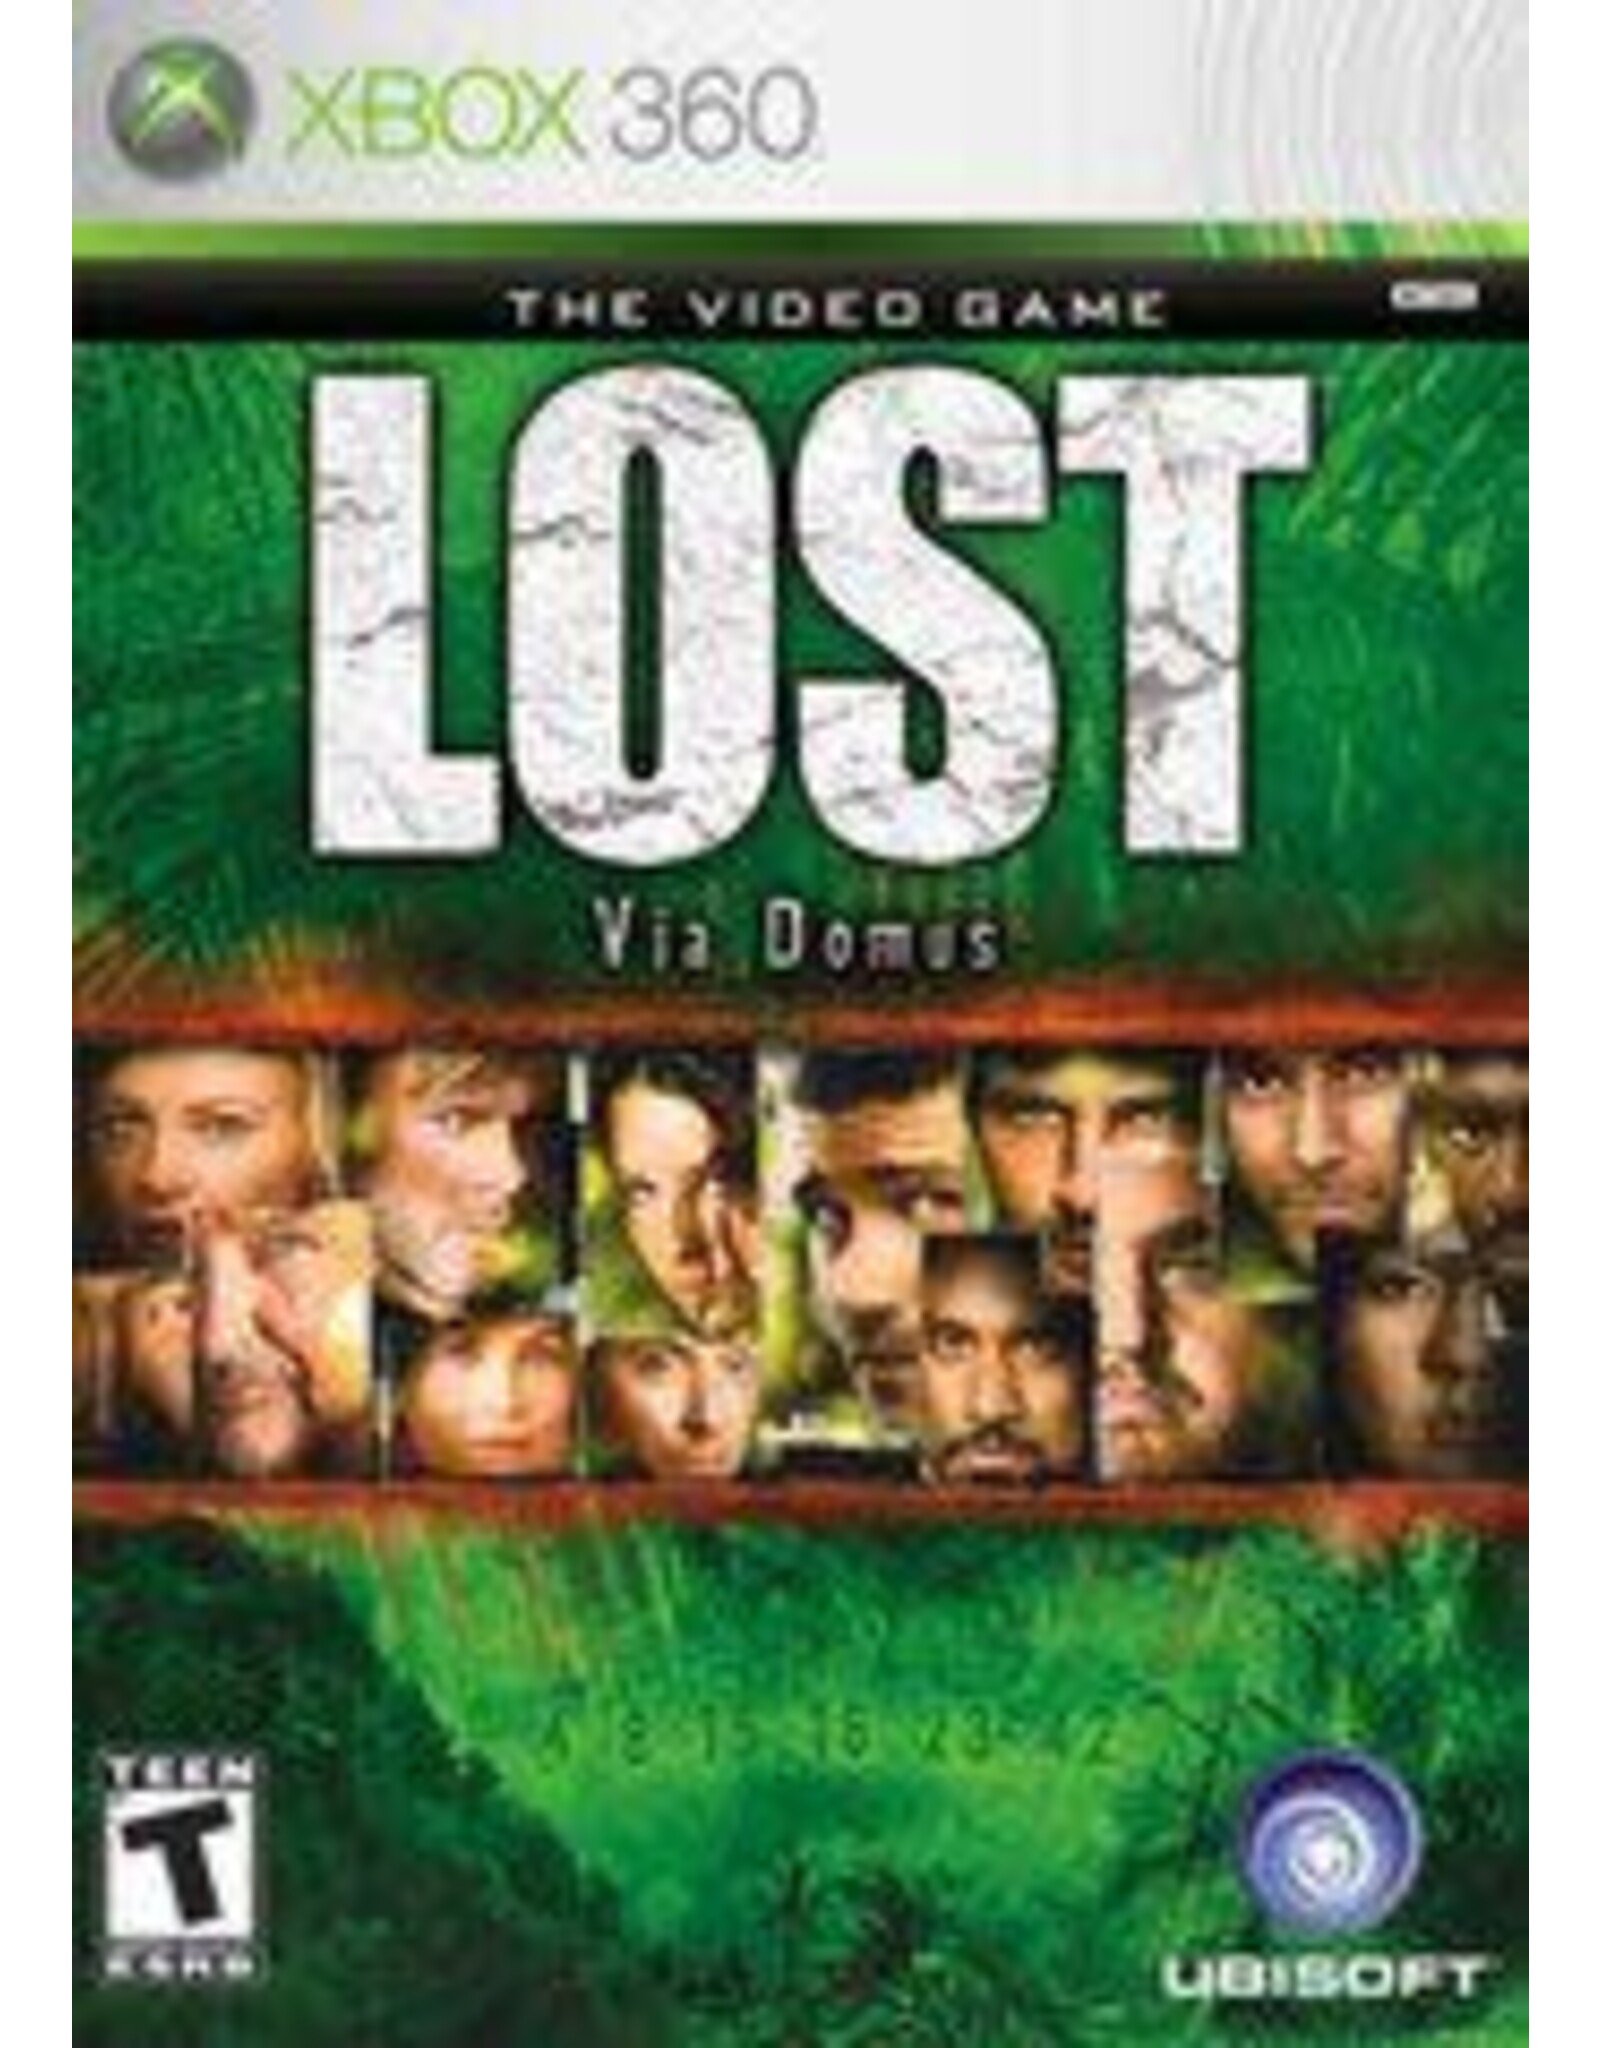 Xbox 360 Lost Via Domus (No Manual, Damaged Sleeve)